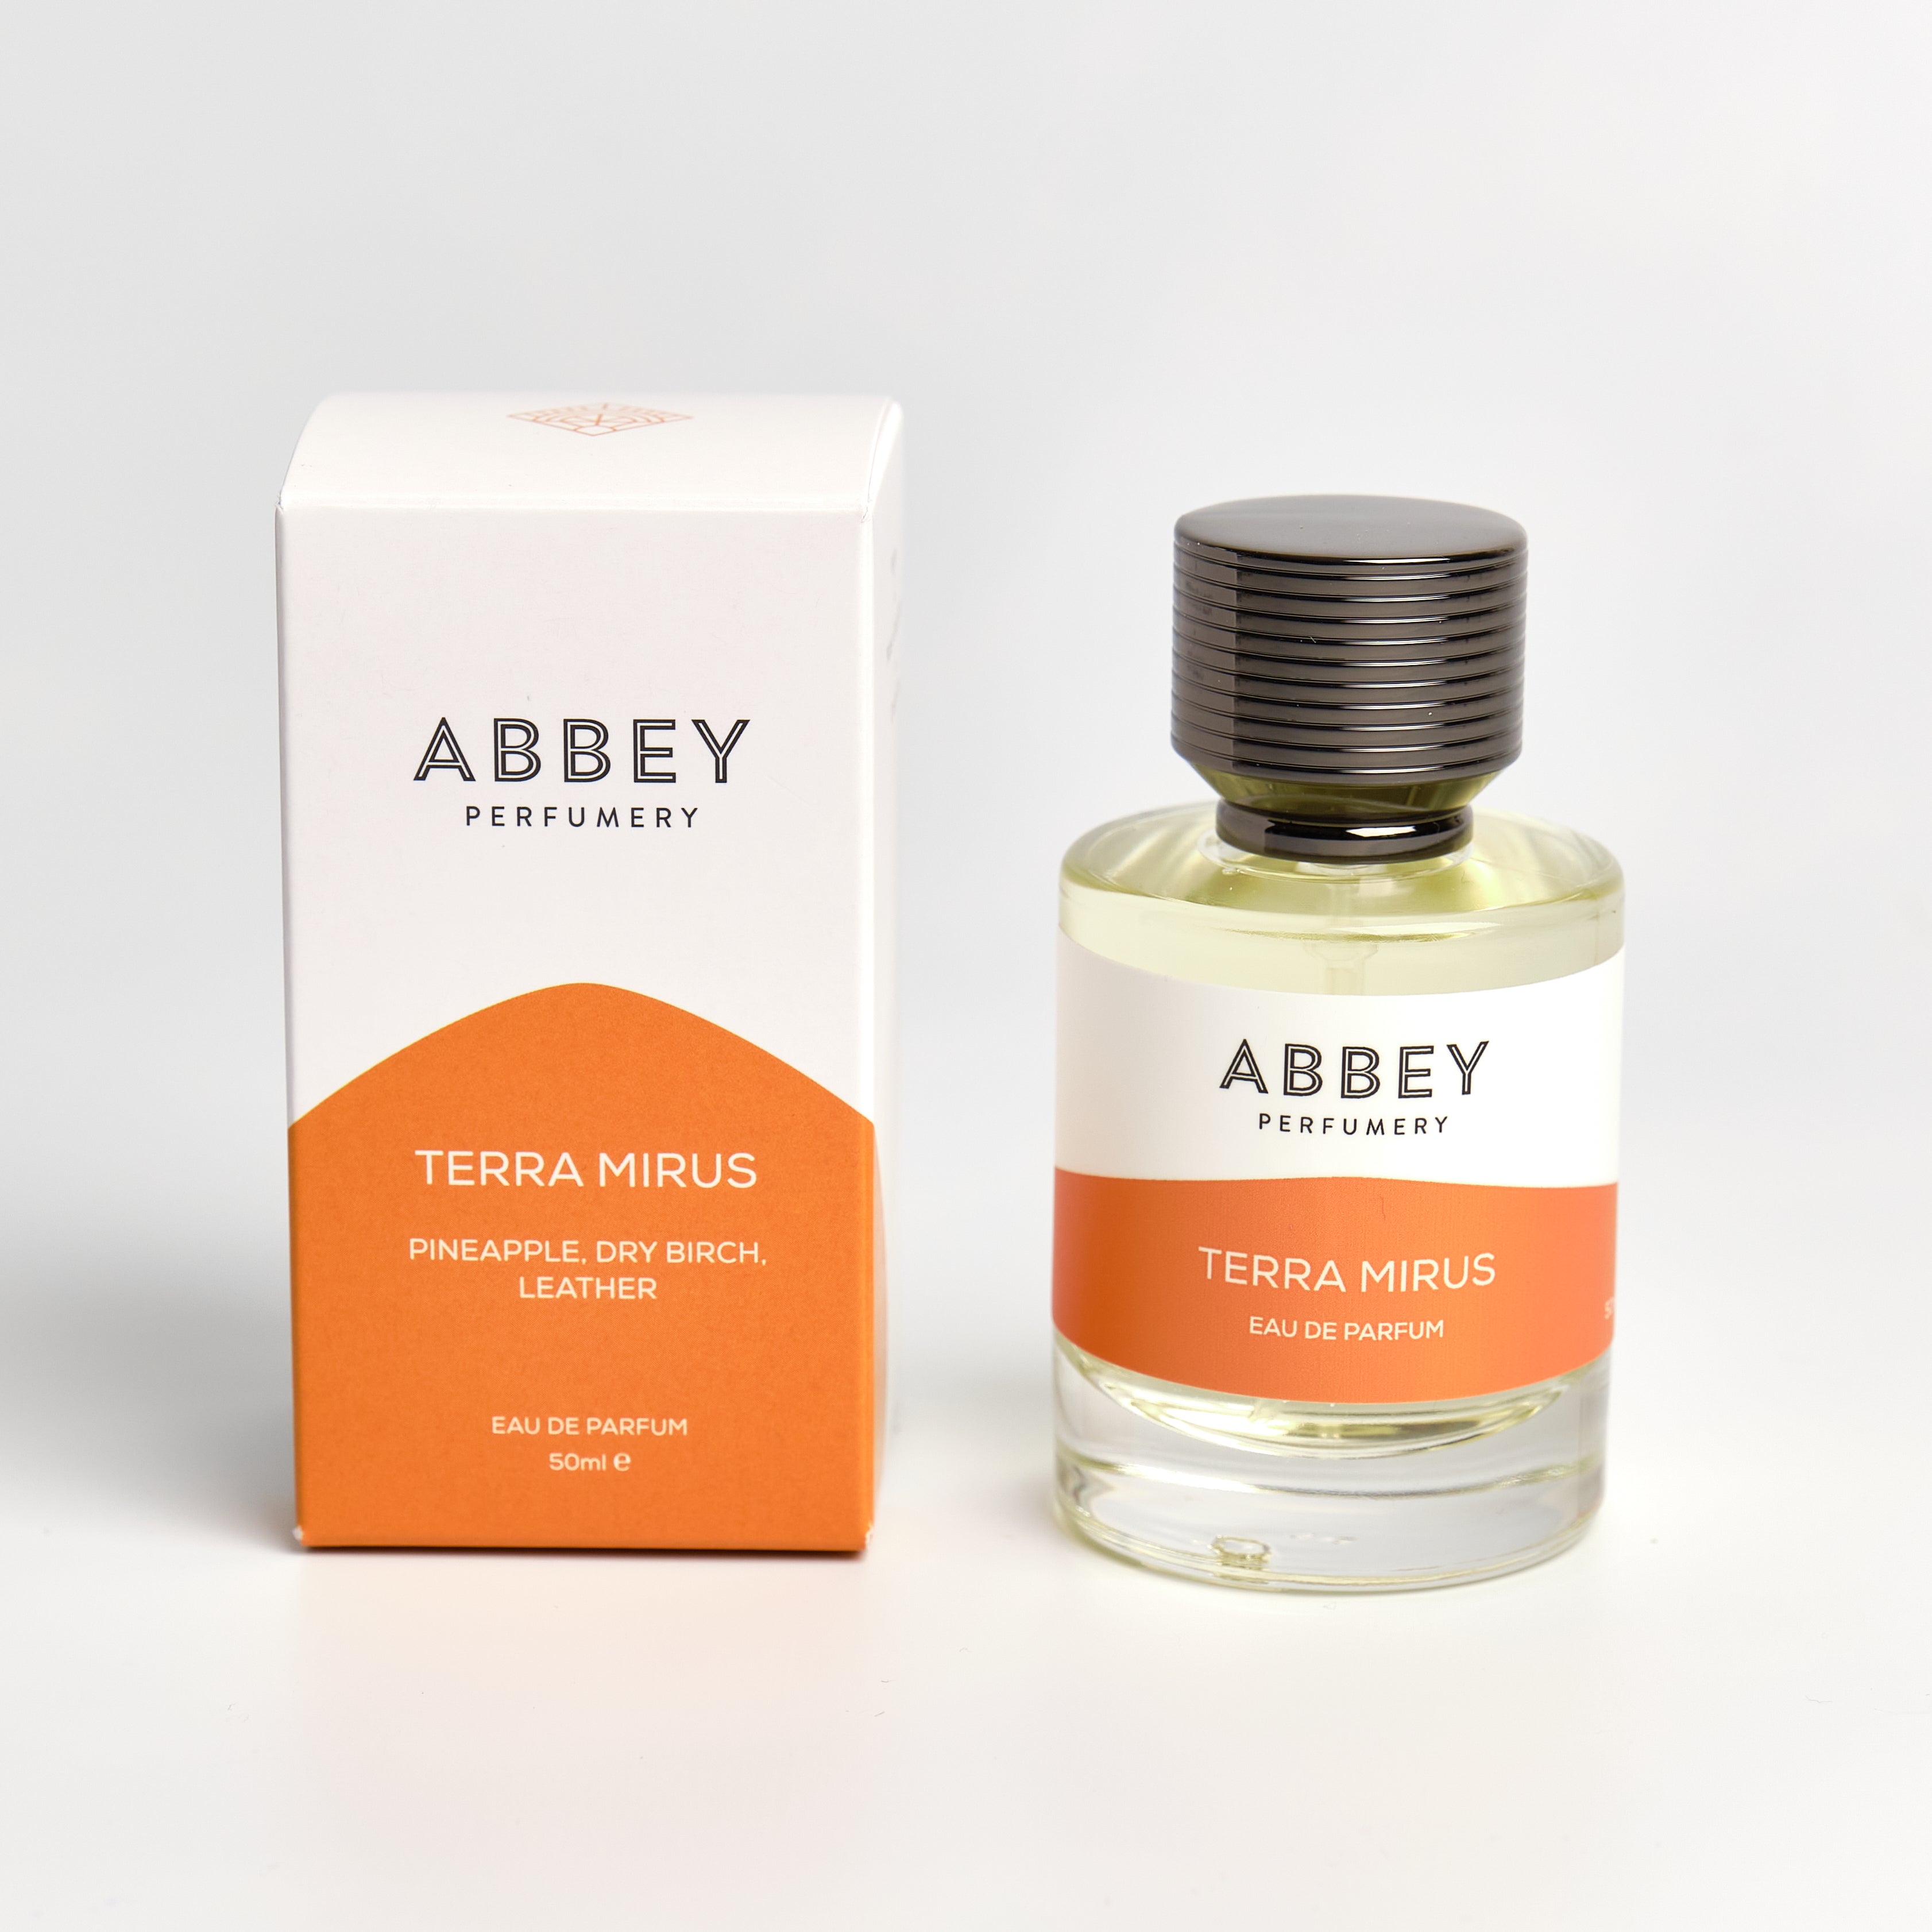 Terra Mirus perfume bottle and box 50ml on white background